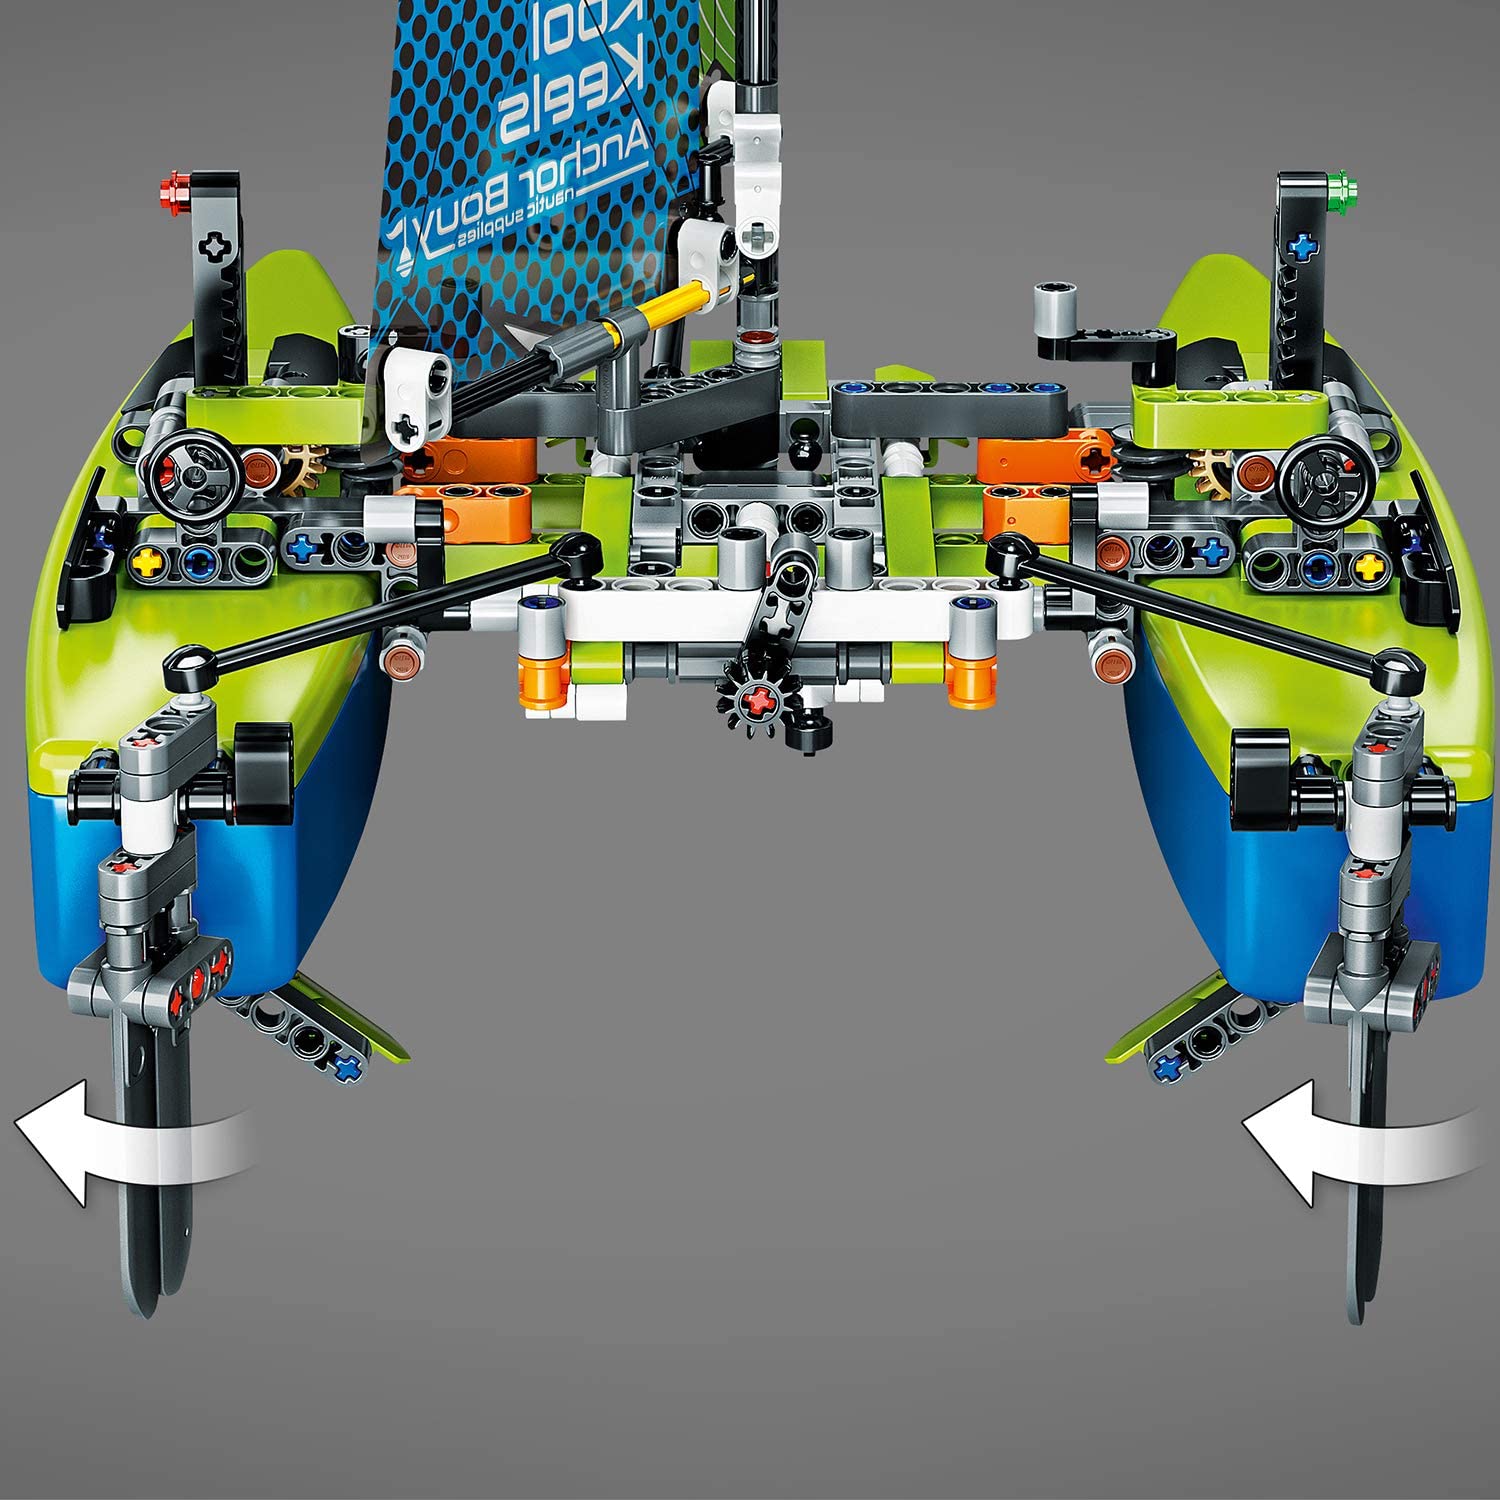 Lego Technic Catamaran Model Sailboat Building Kit, 404 Pieces, -- ANB Baby